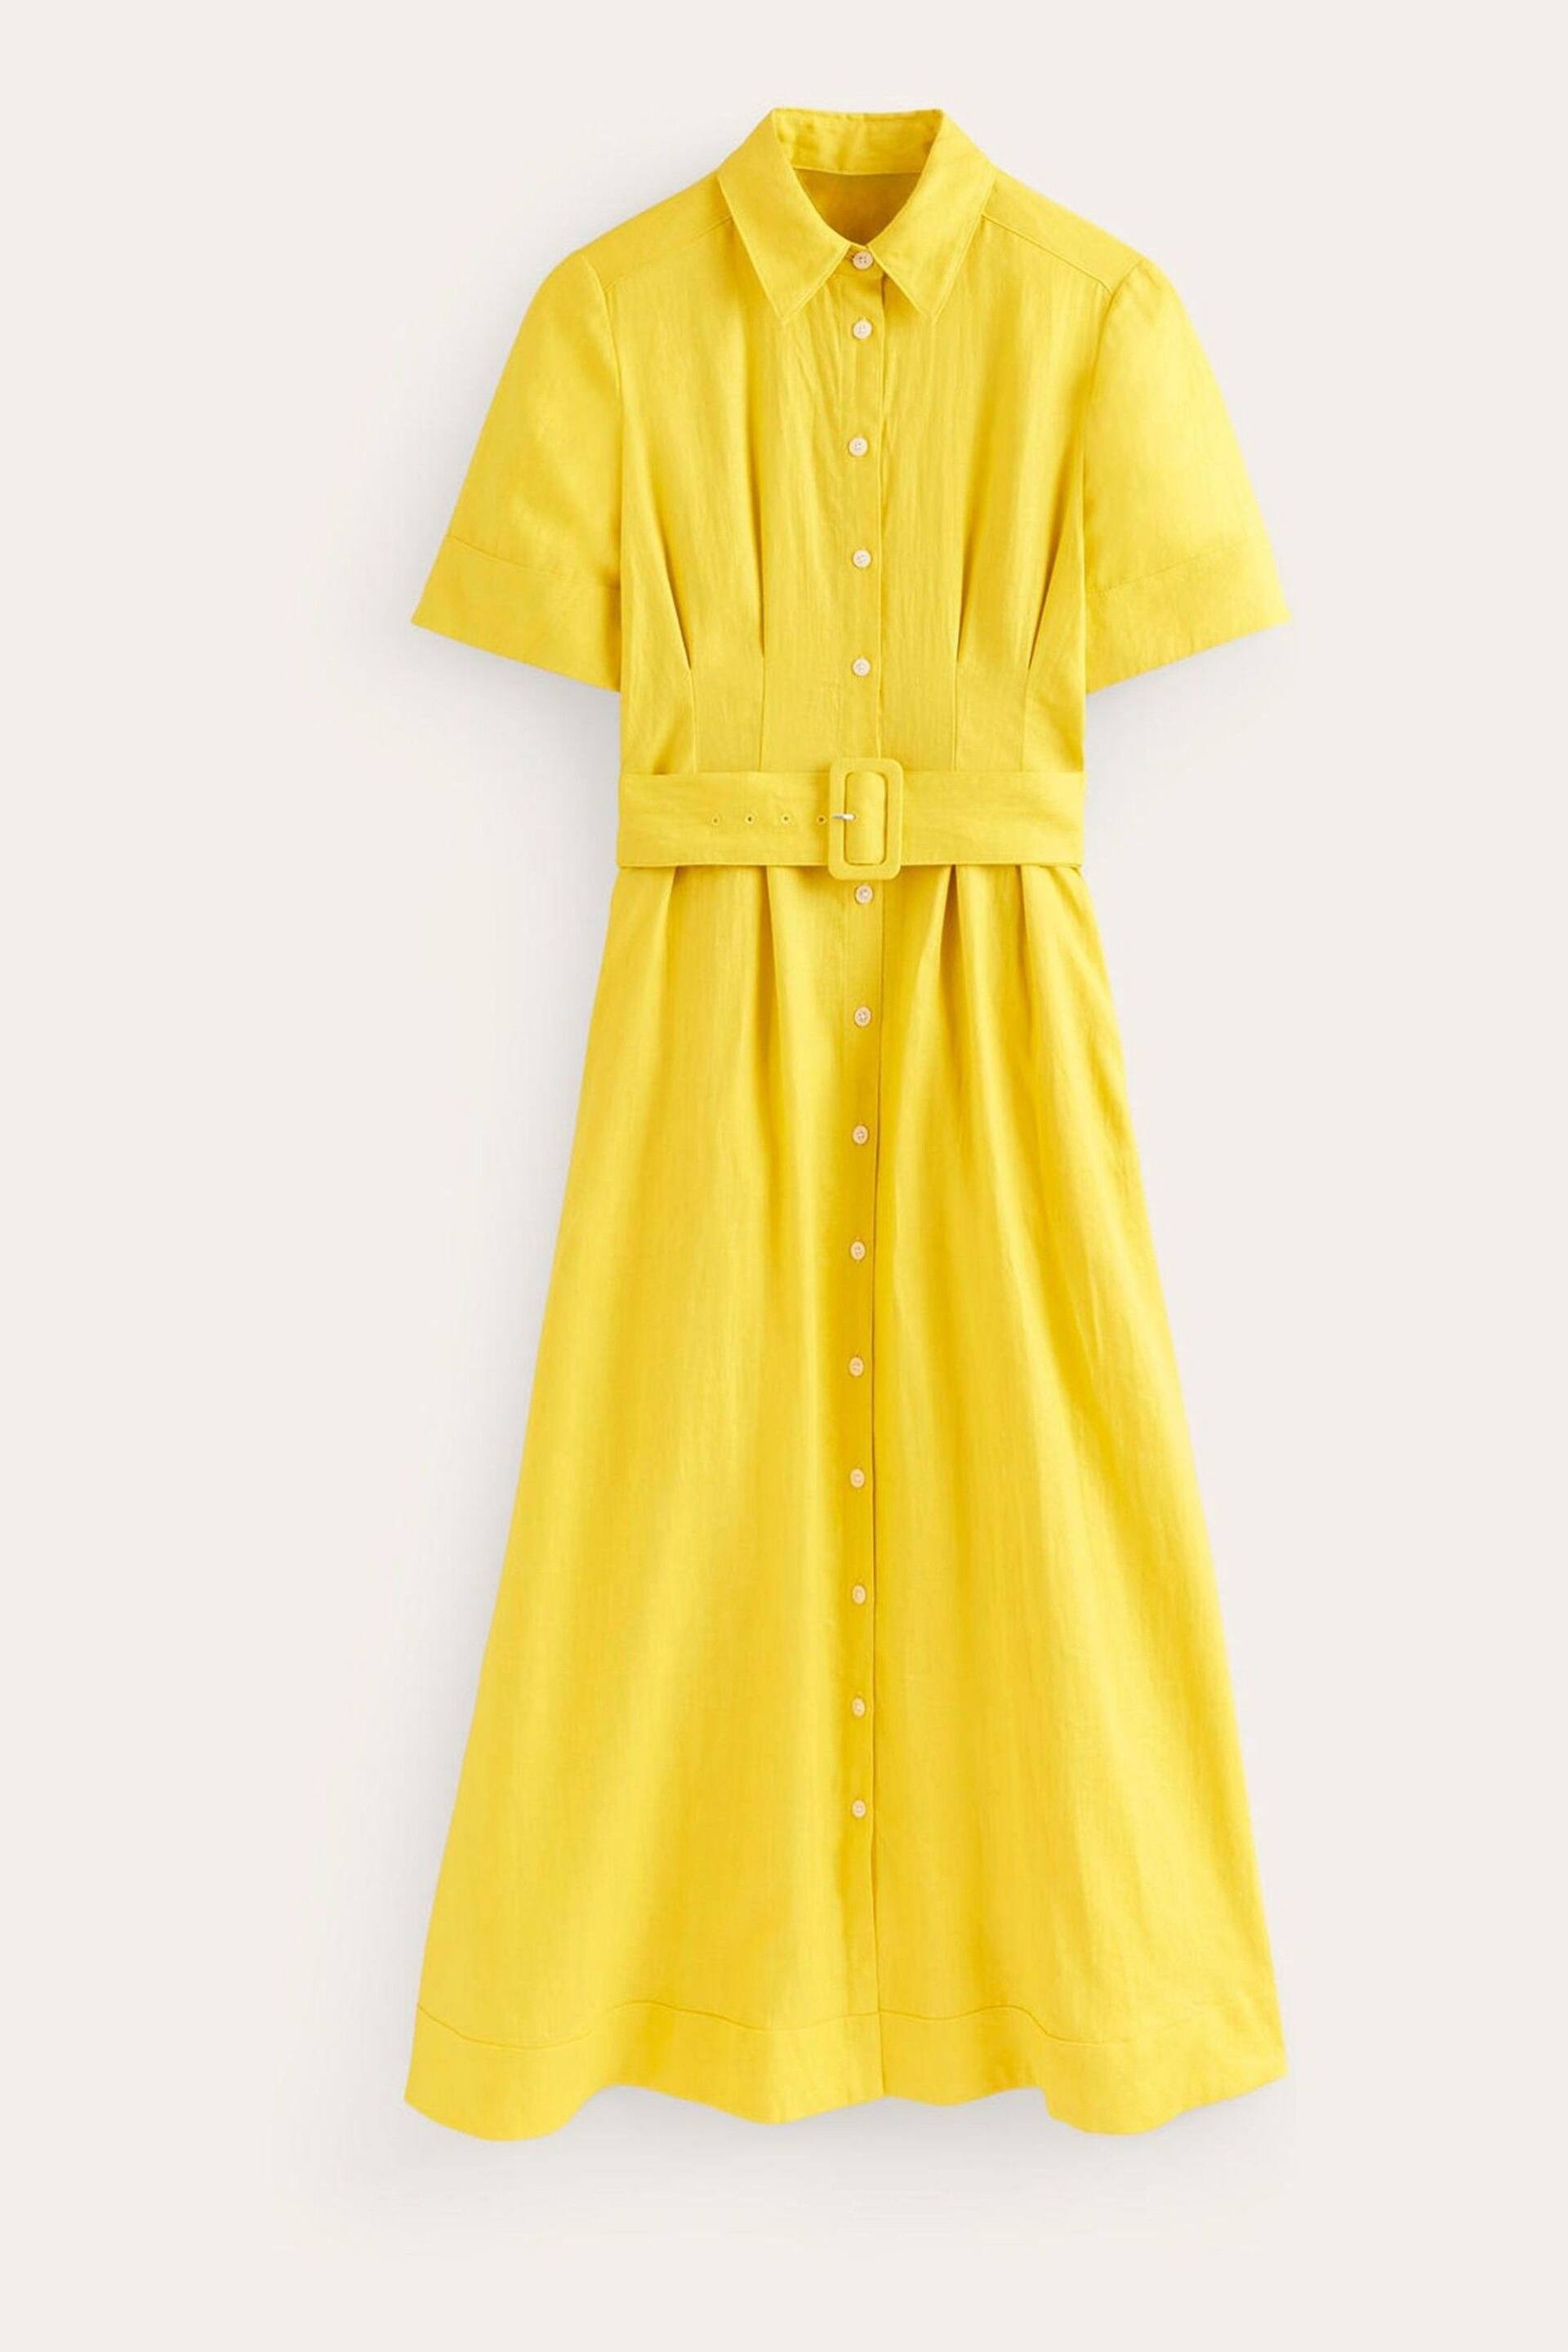 Boden Yellow Louise Linen Midi Shirt Dress - Image 5 of 5